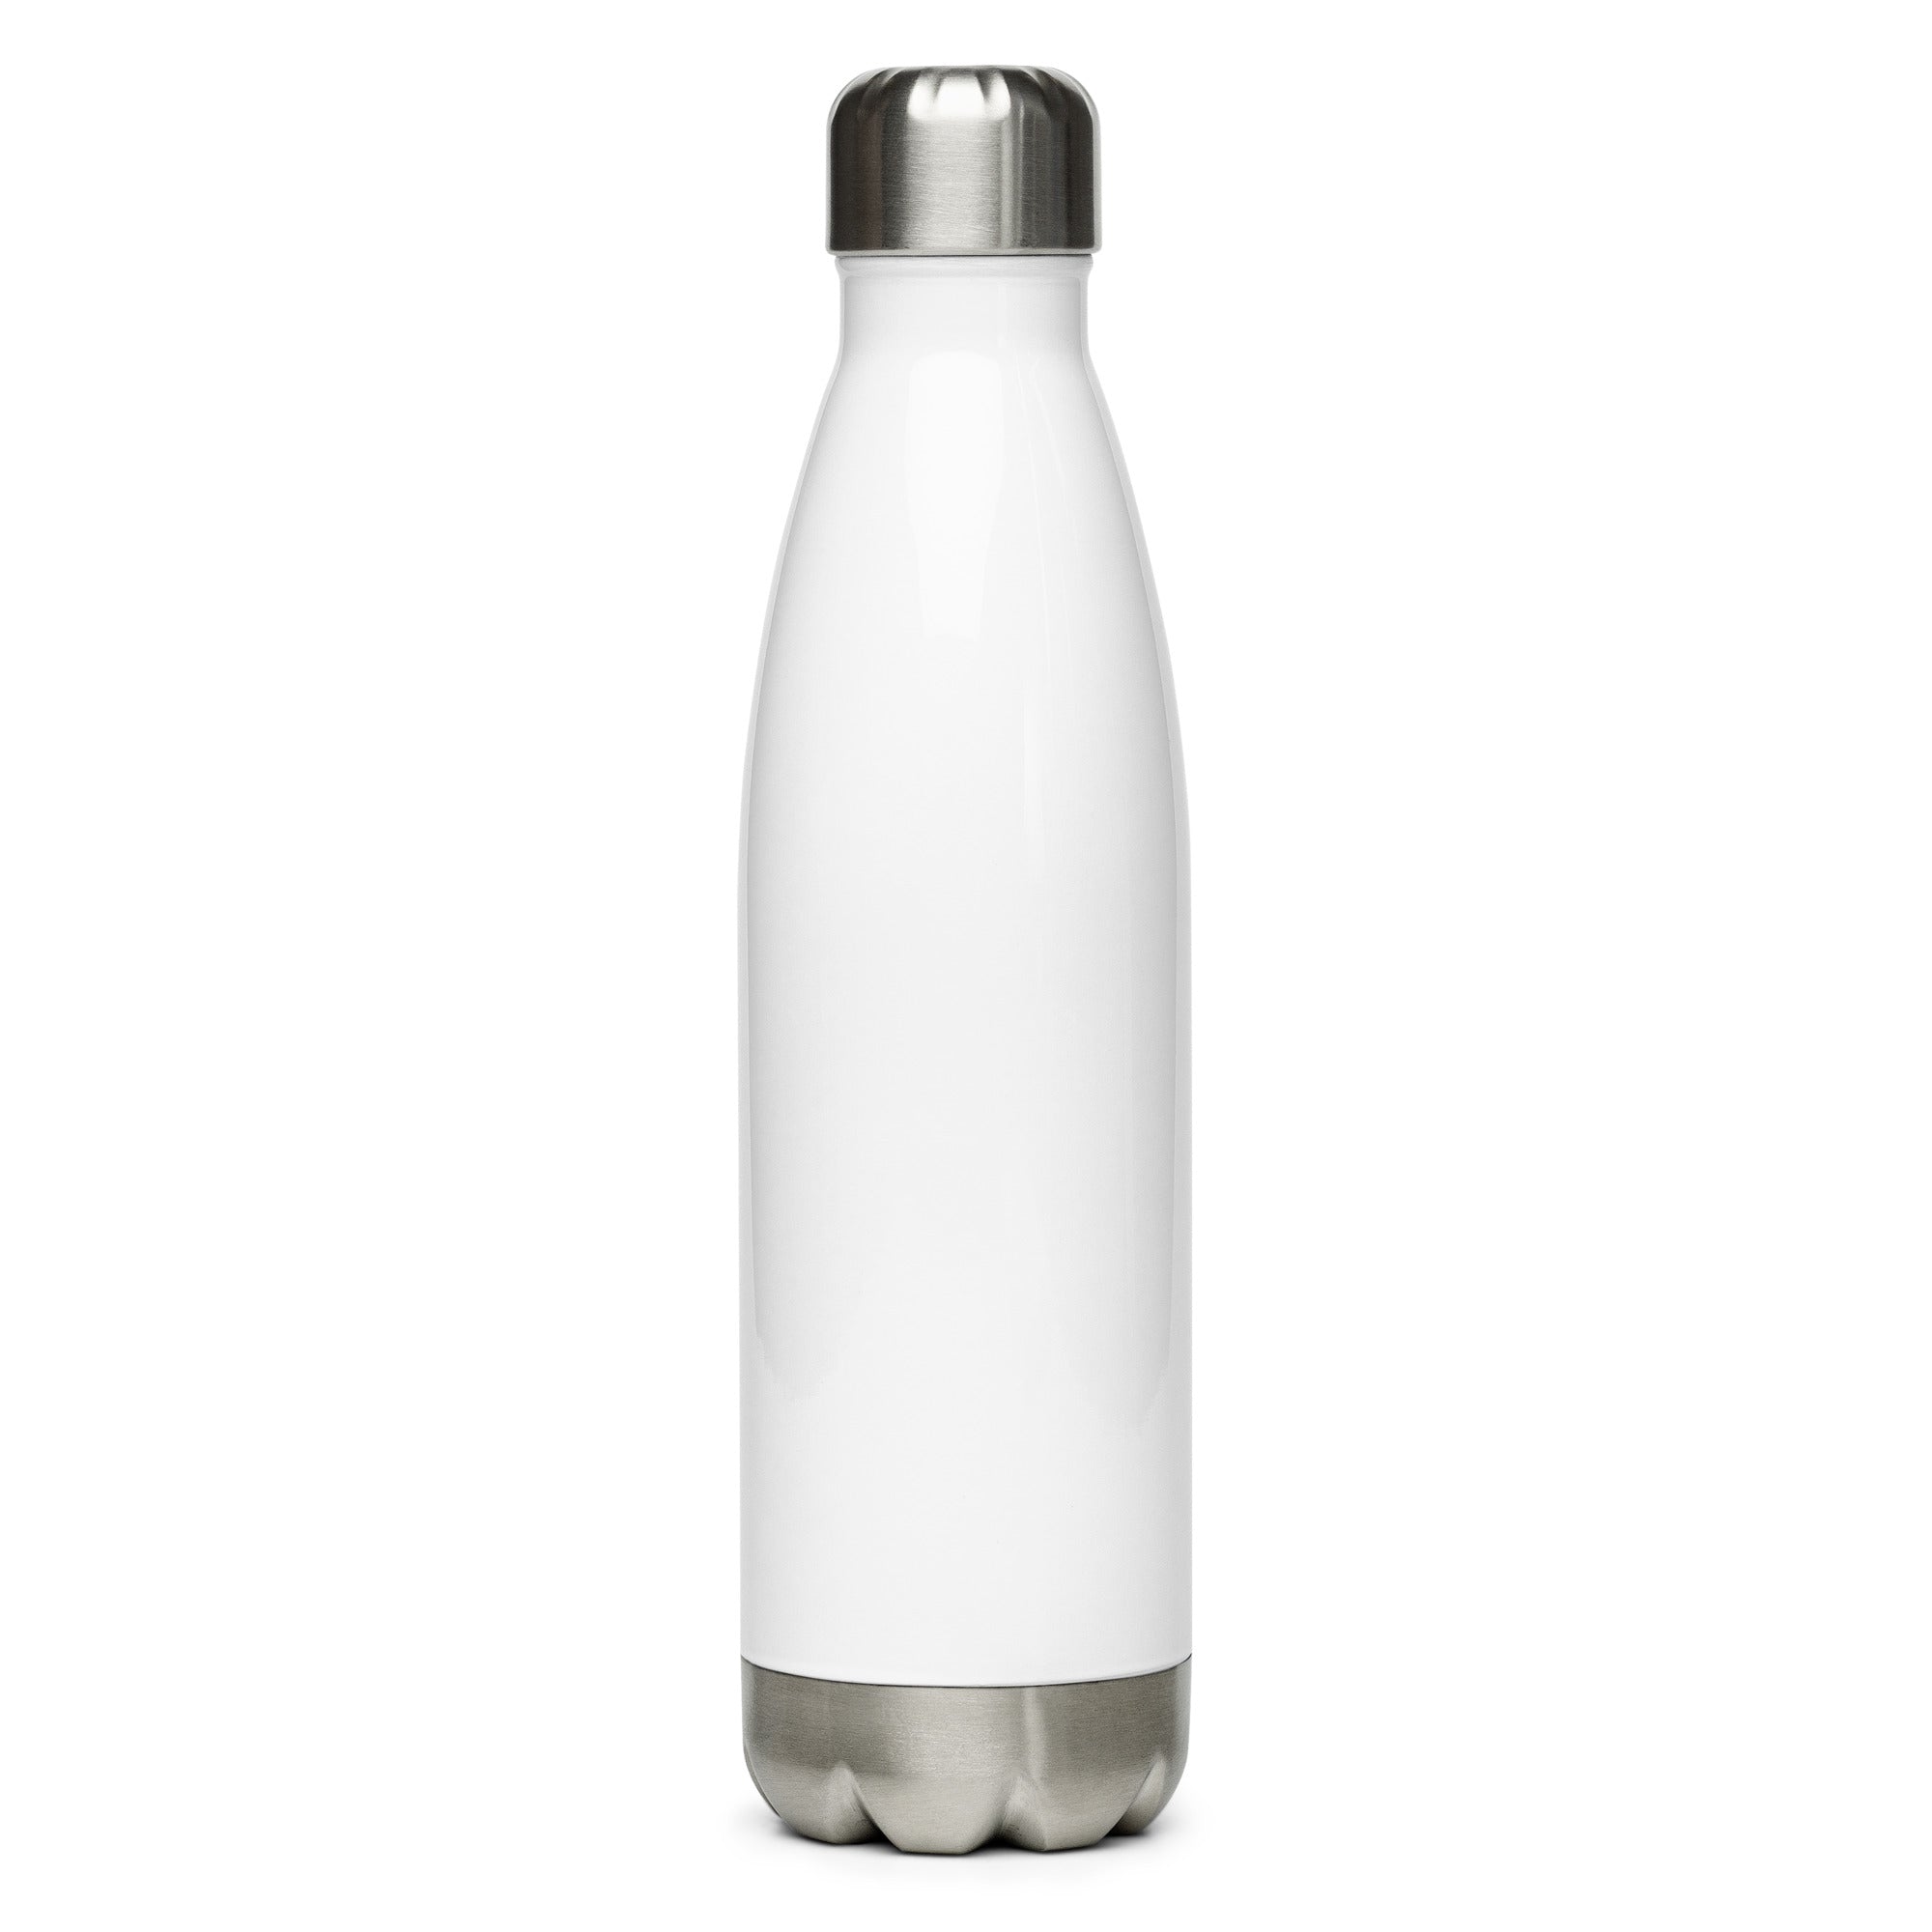 TCA Stainless Steel Water Bottle